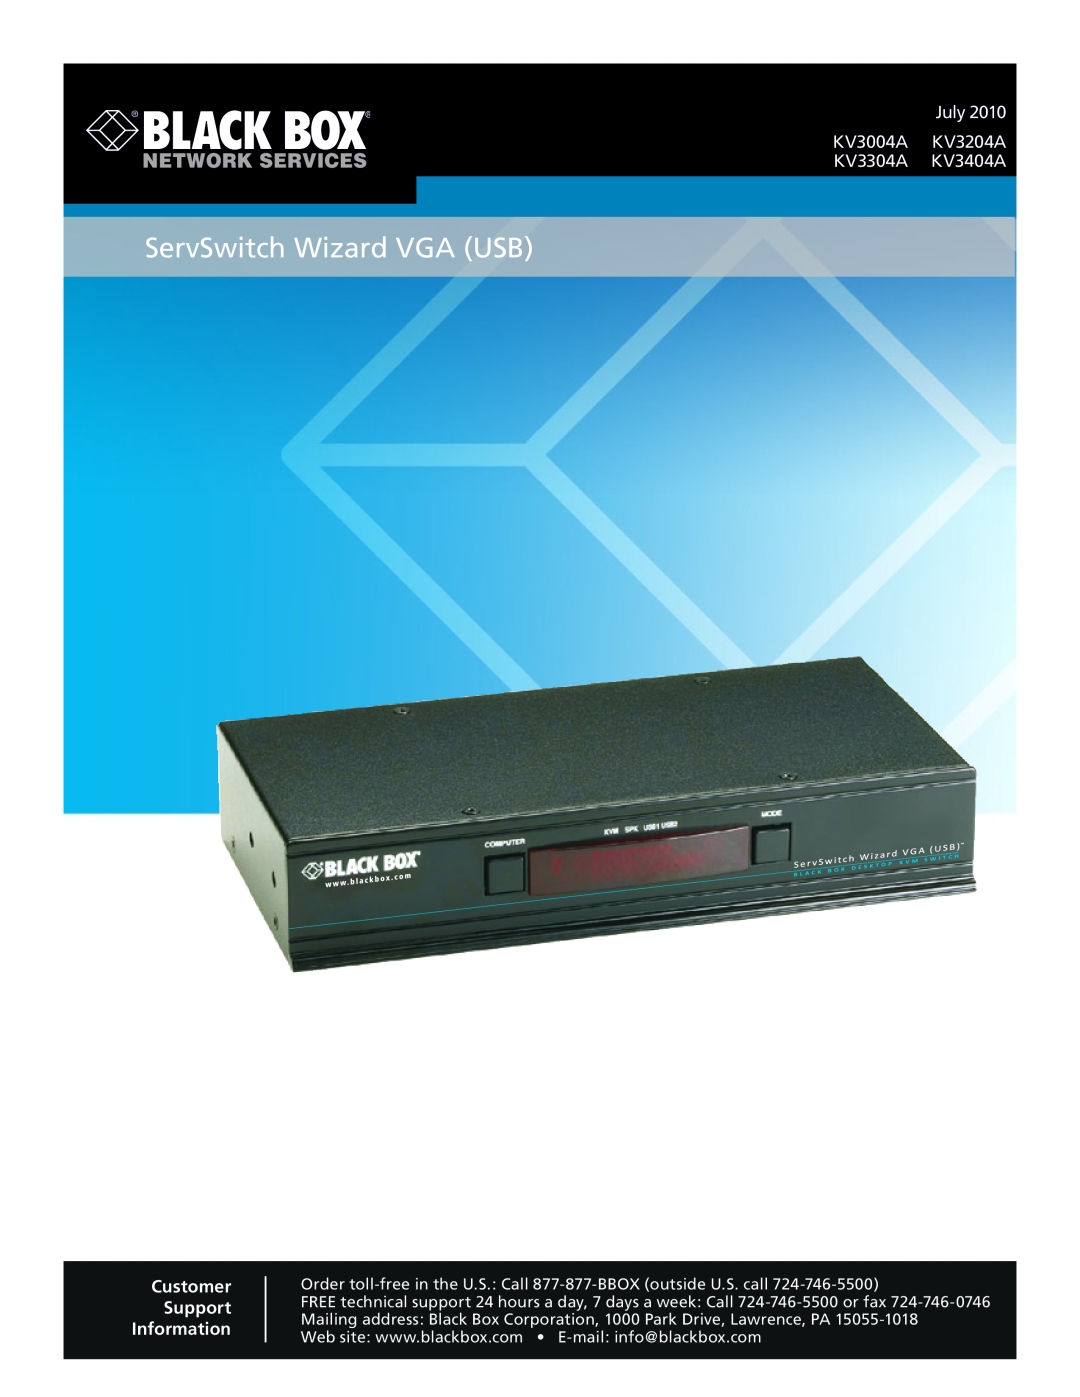 Black Box KV3004A manual ServSwitch Wizard VGA USB, Network Services, July, KV3204A, KV3304A, KV3404A 